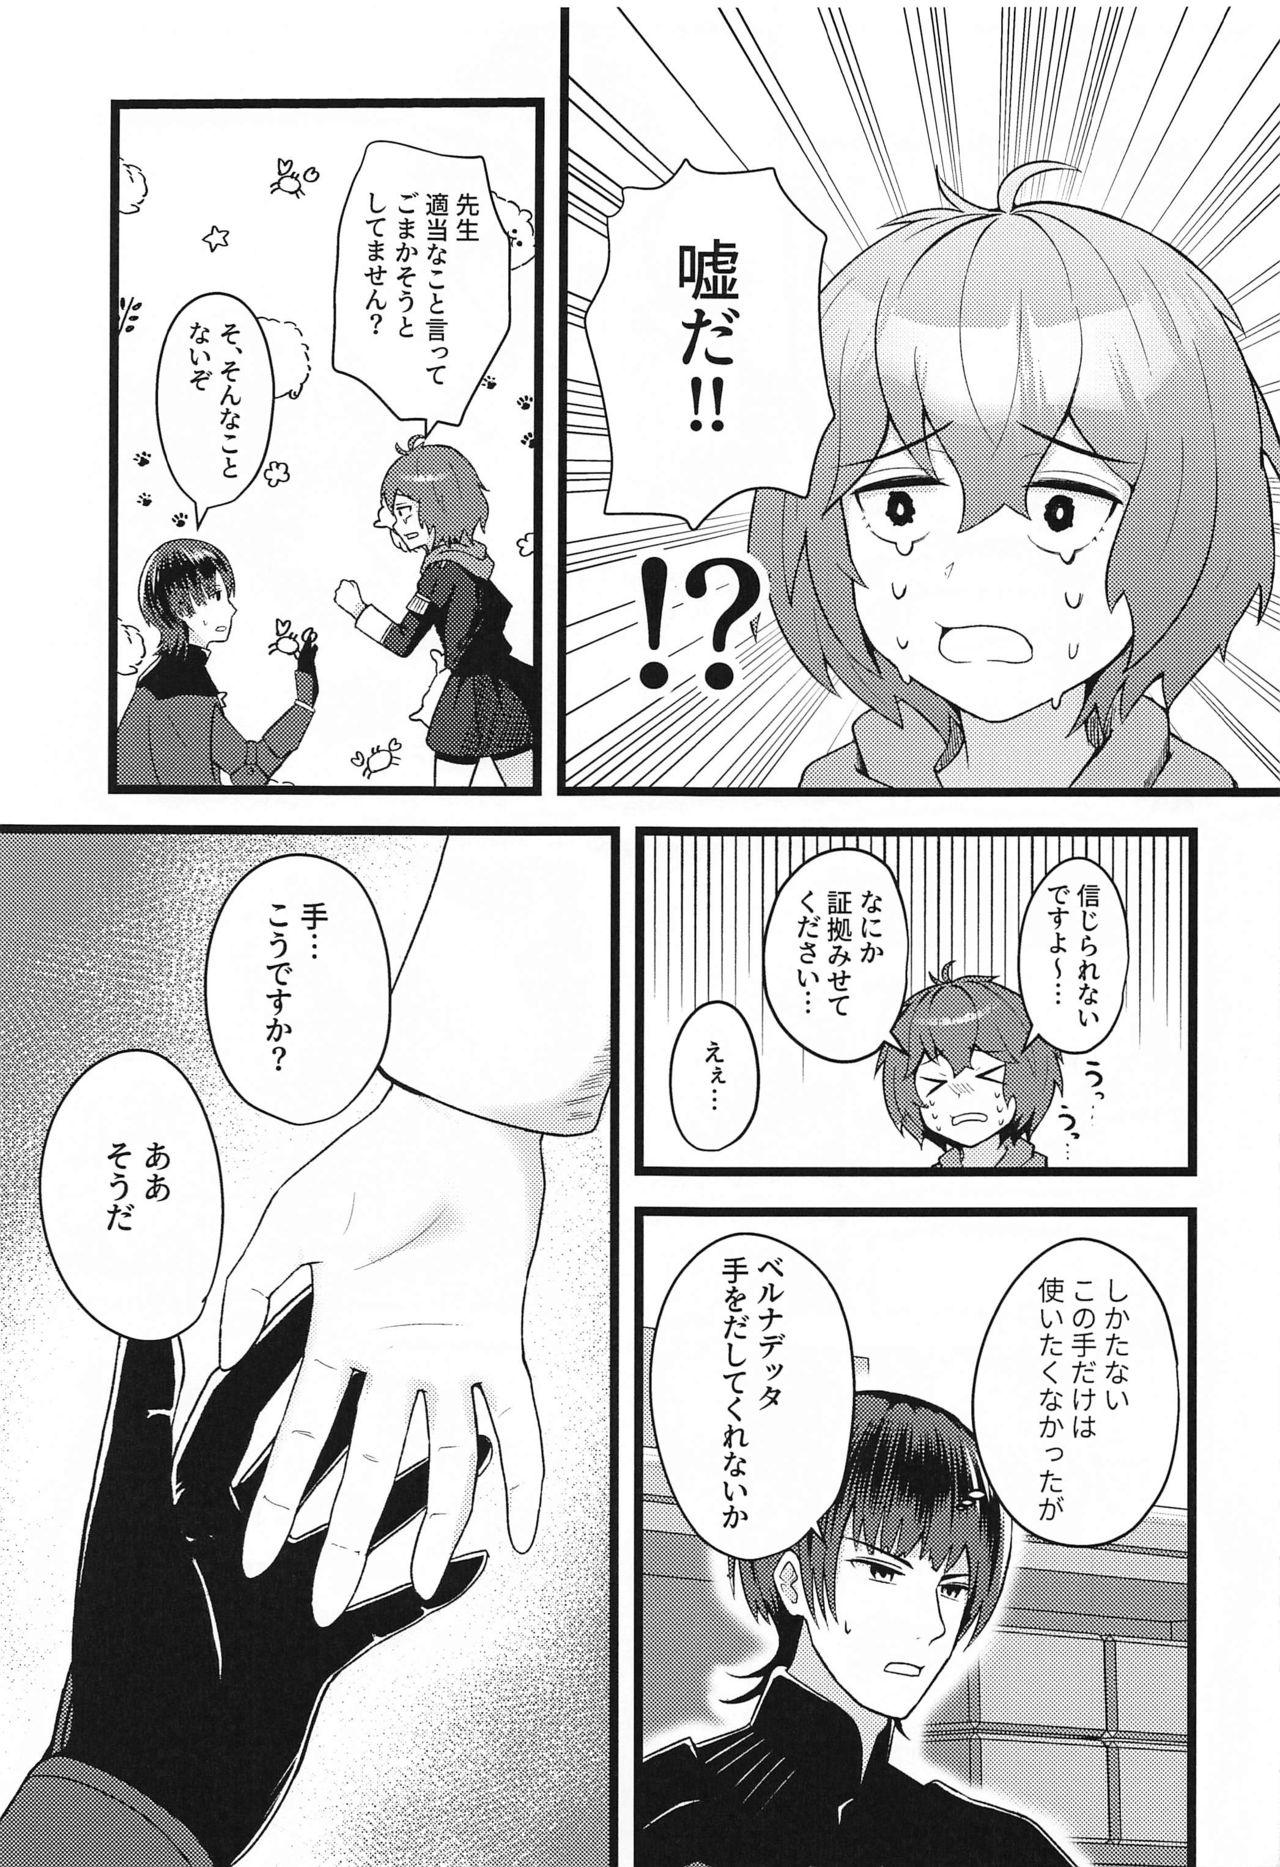 Gayporn Bernadetta ga Kawaii kara Choukai Menshoku ni Natte mo Ii ka! - Fire emblem three houses Babysitter - Page 6